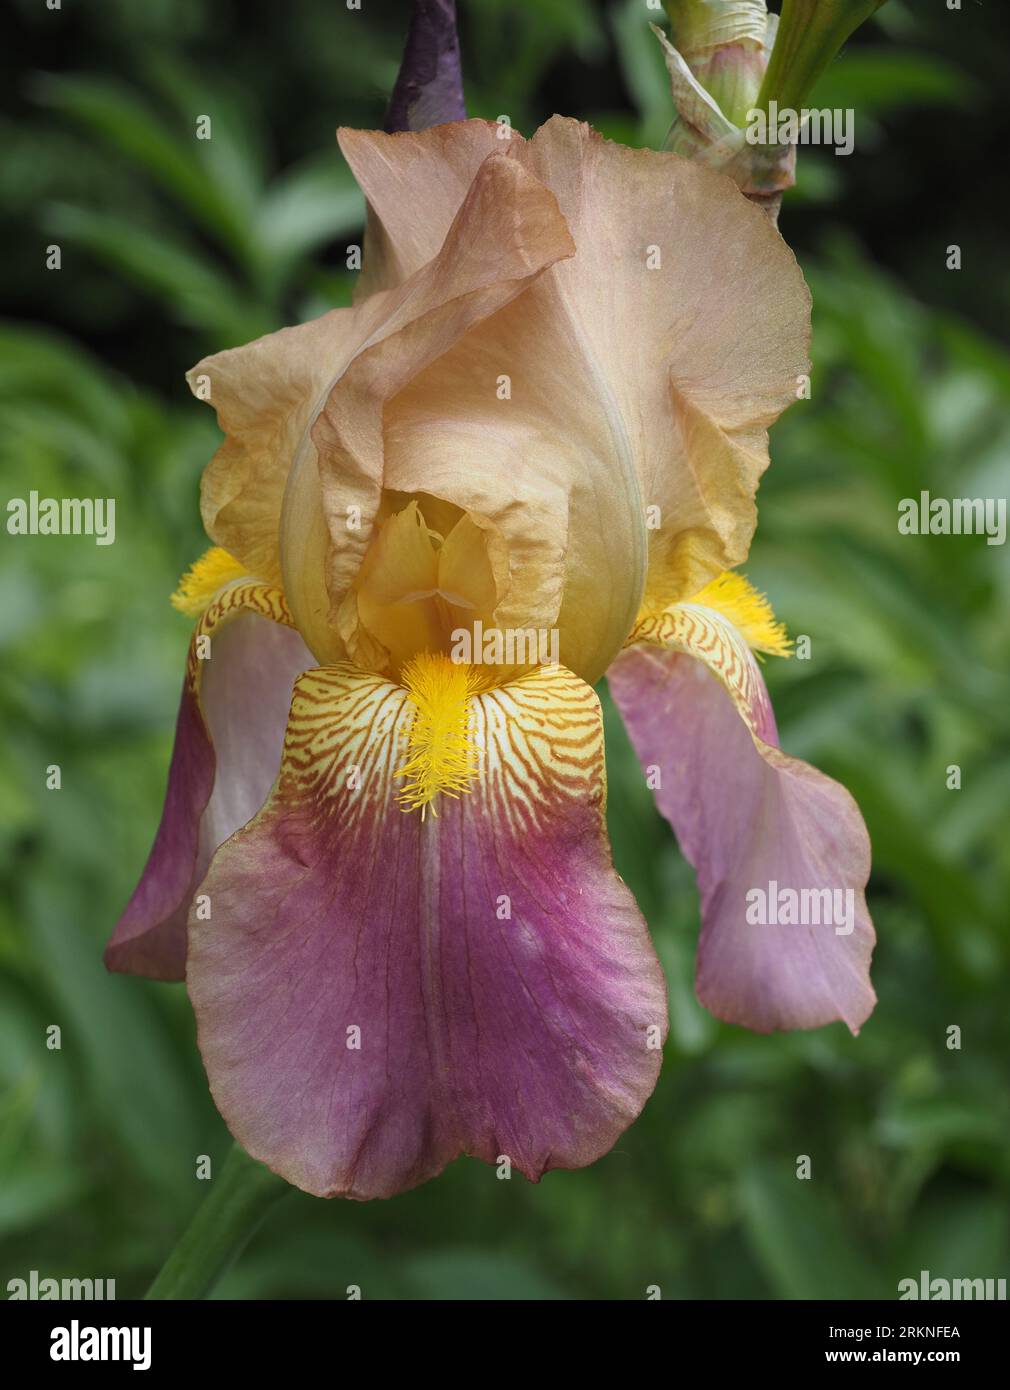 Iris 'Rameses' - Tall bearded iris flower (peach, purple and yellow in color) - Springtime blossom. Scientific name: Iridaceae. Stock Photo